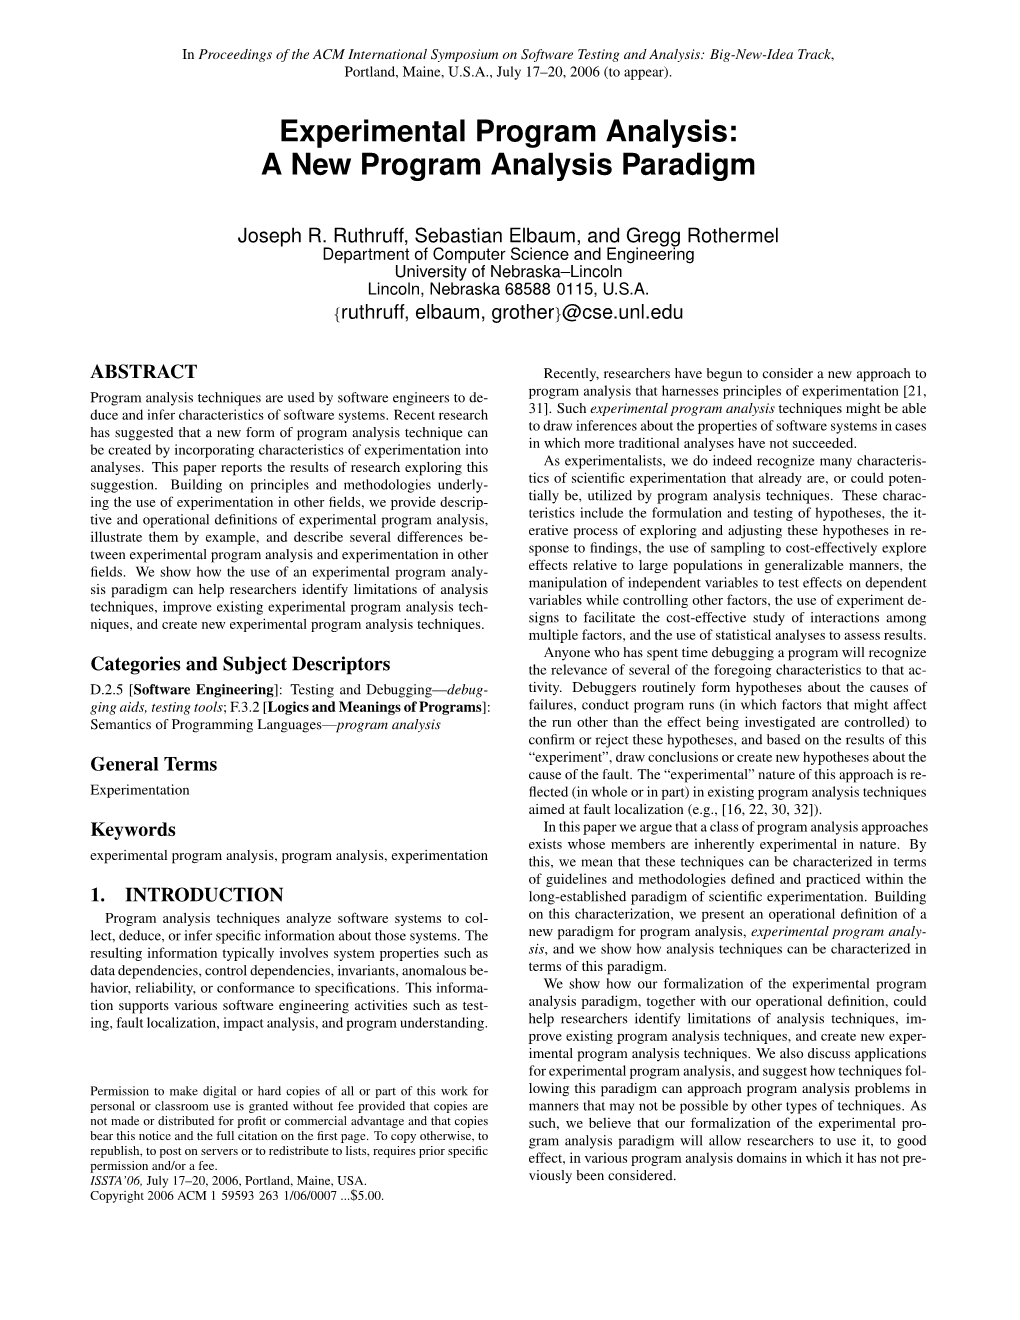 Experimental Program Analysis: a New Program Analysis Paradigm